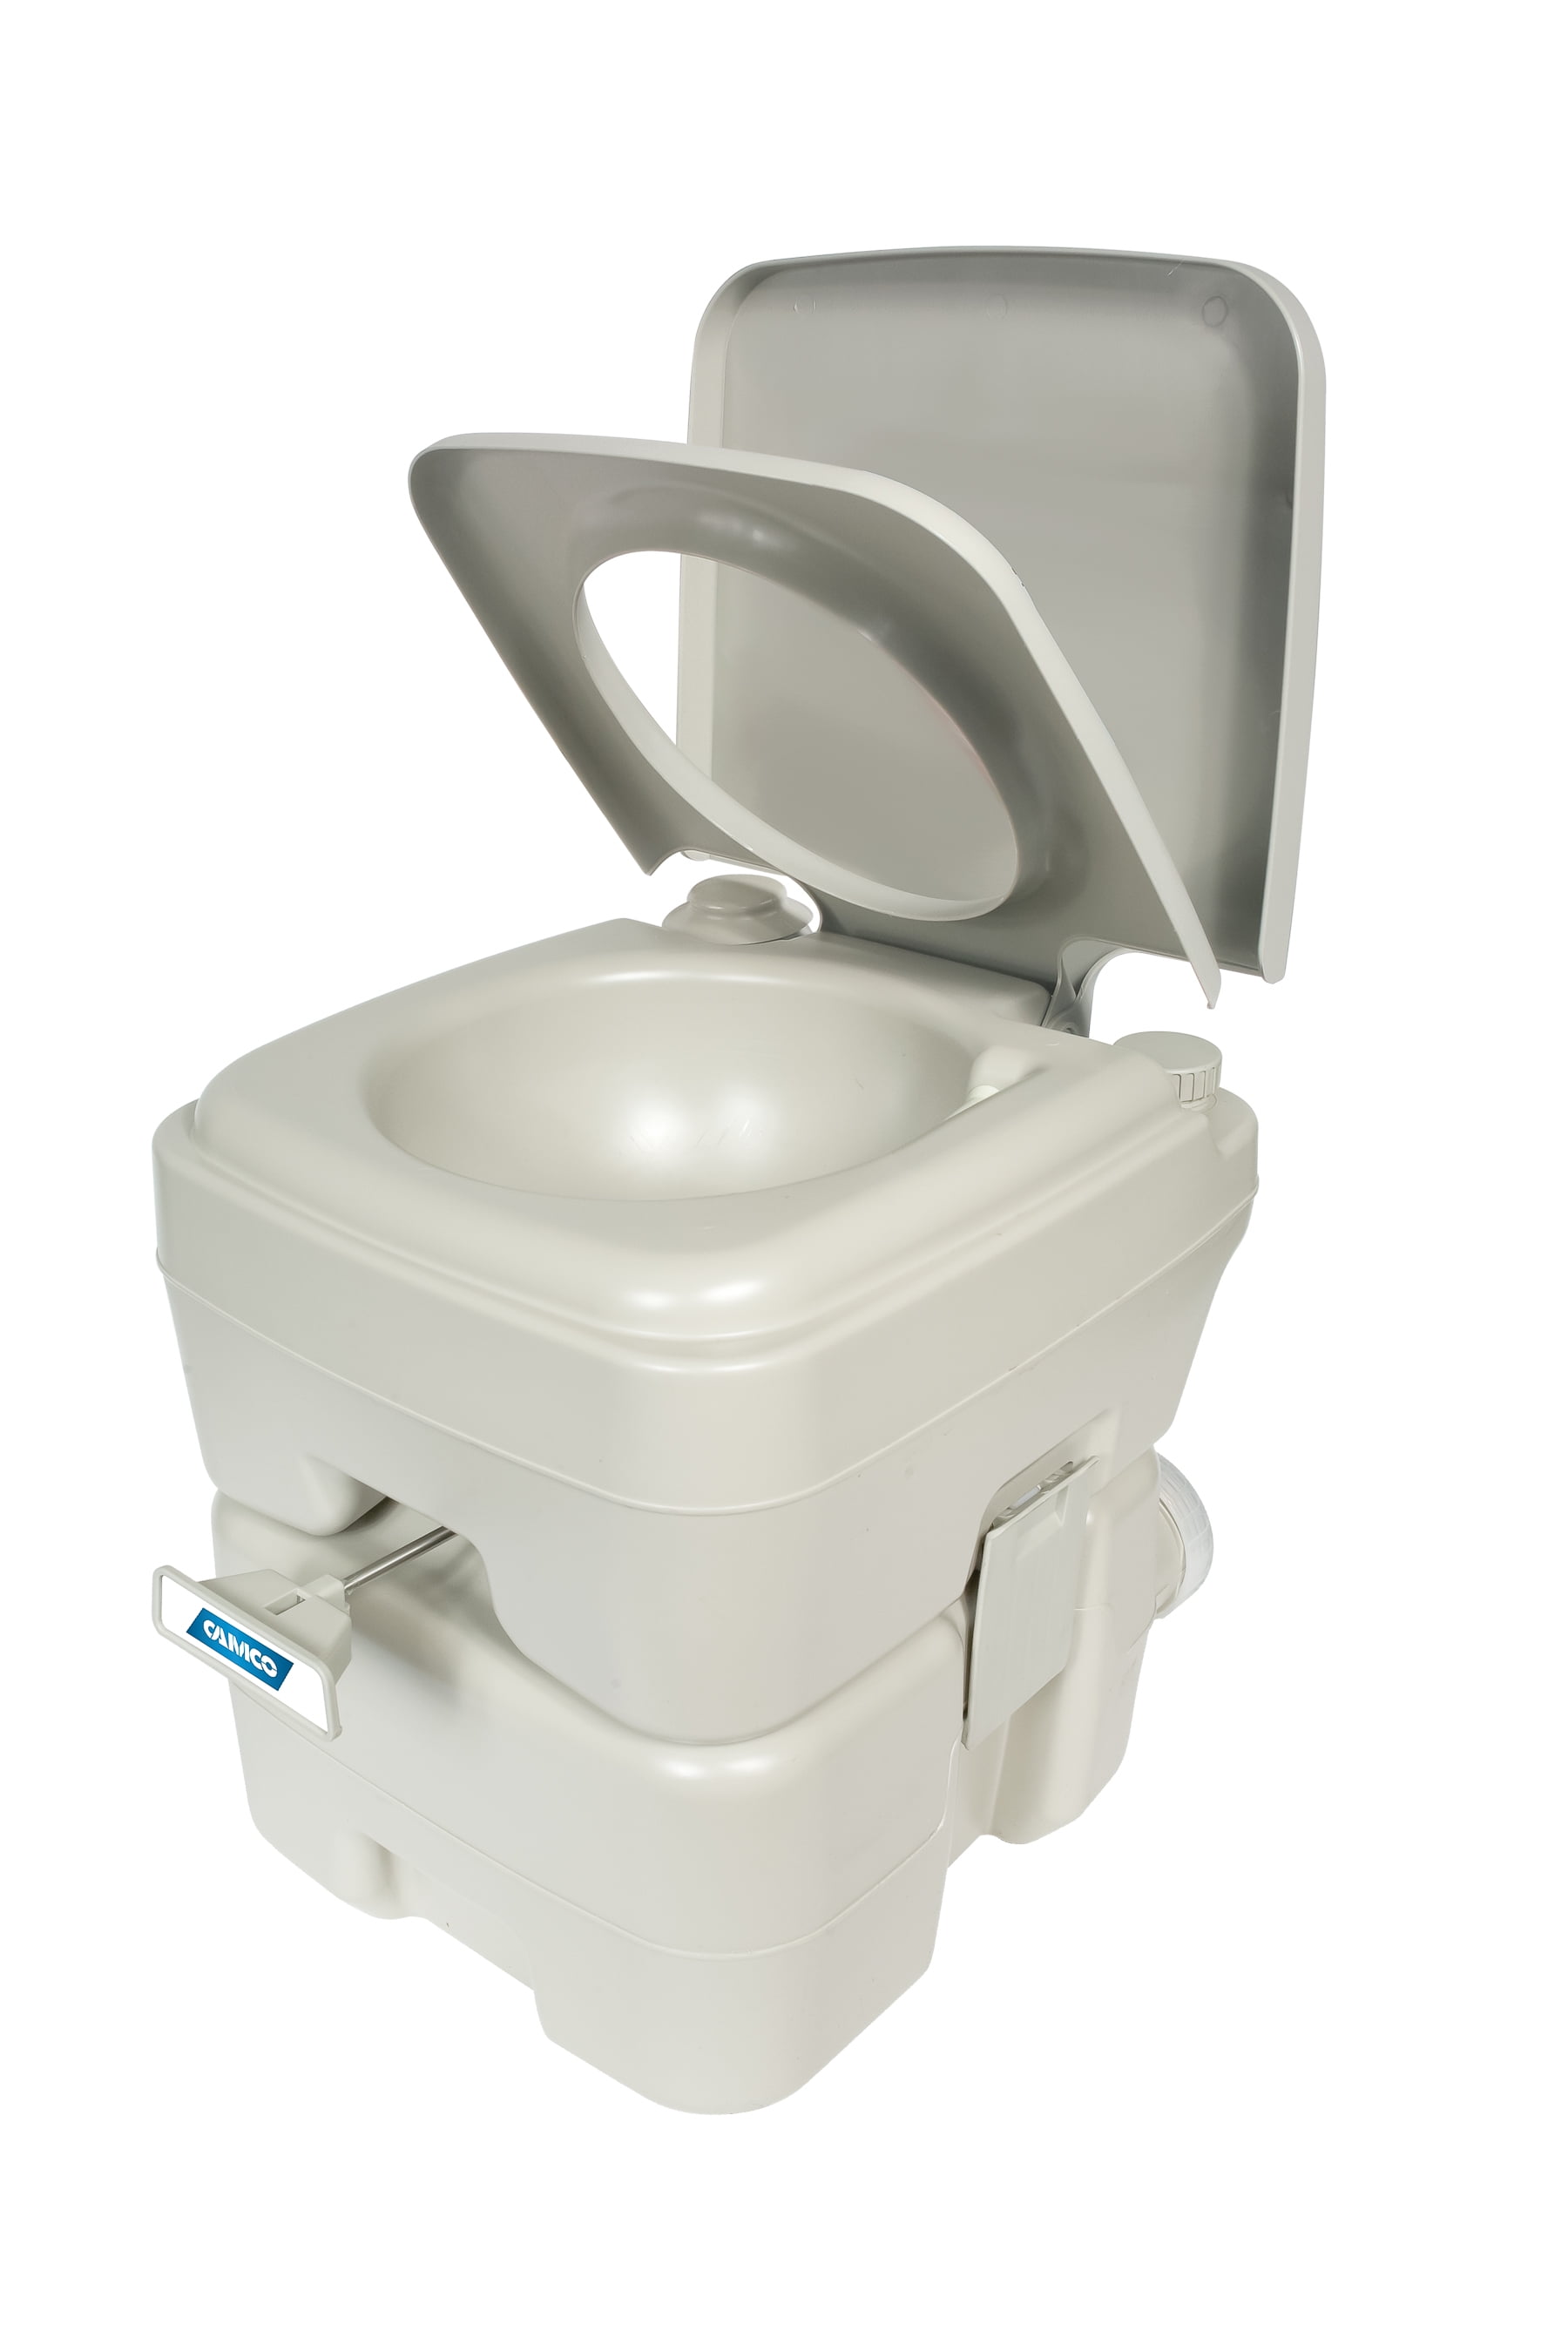 Newavo Evo Portable RV Camping Toilet 5.3 Gallon - RecPro